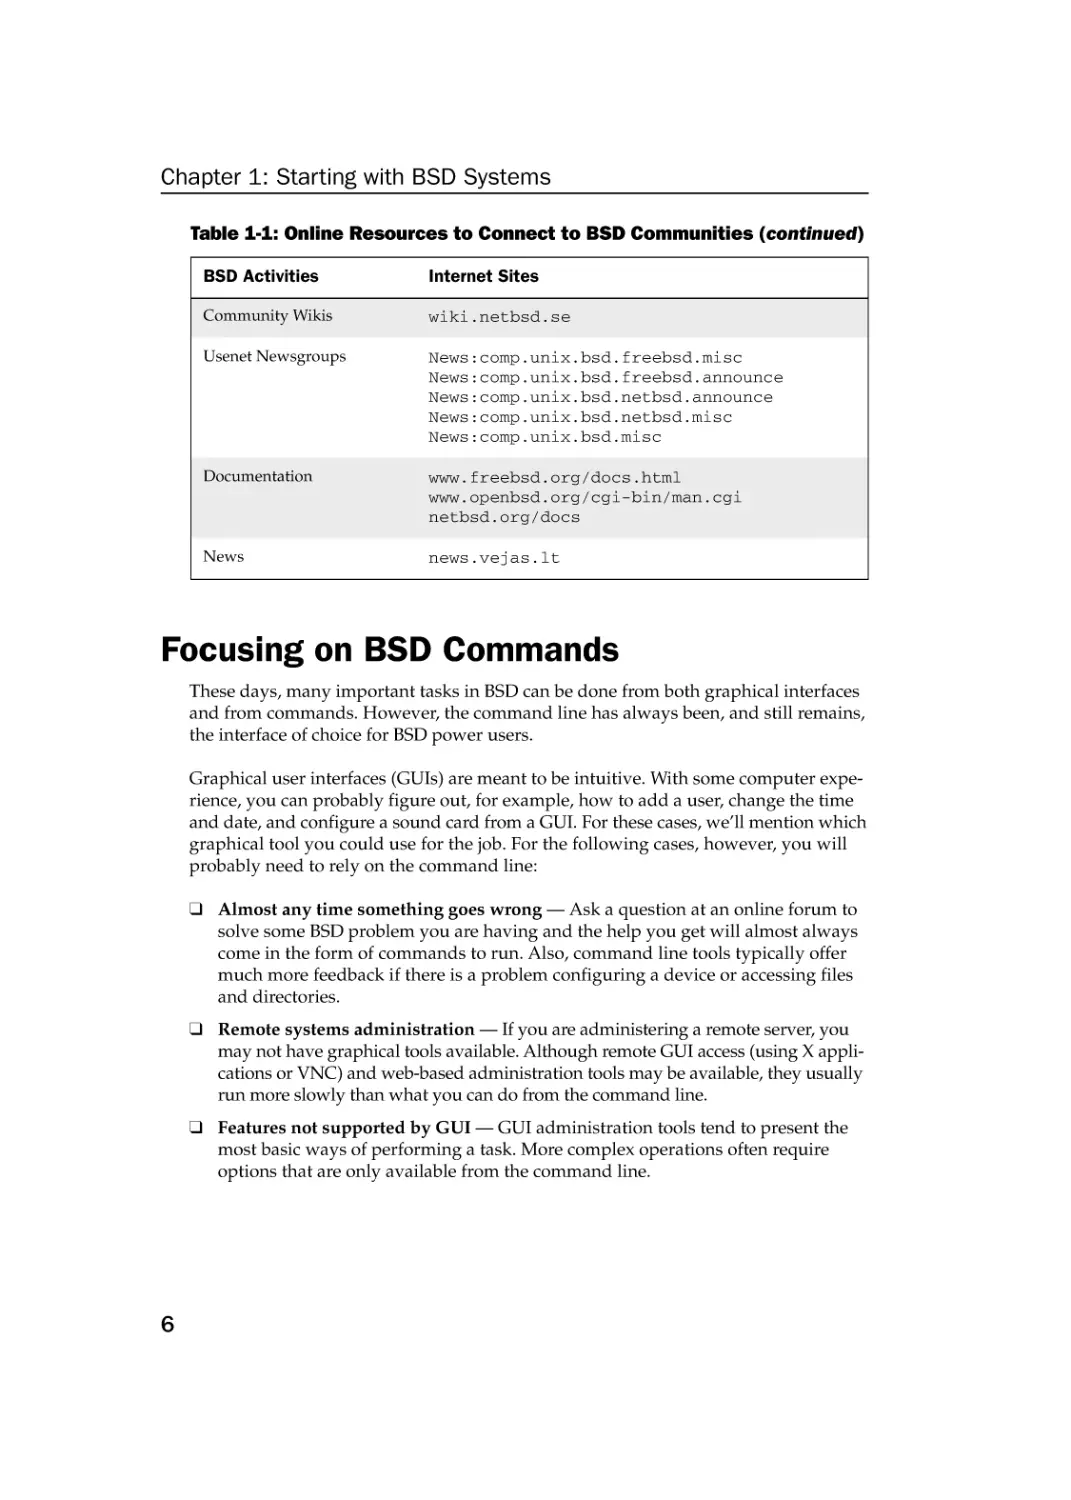 Focusing on BSD Commands